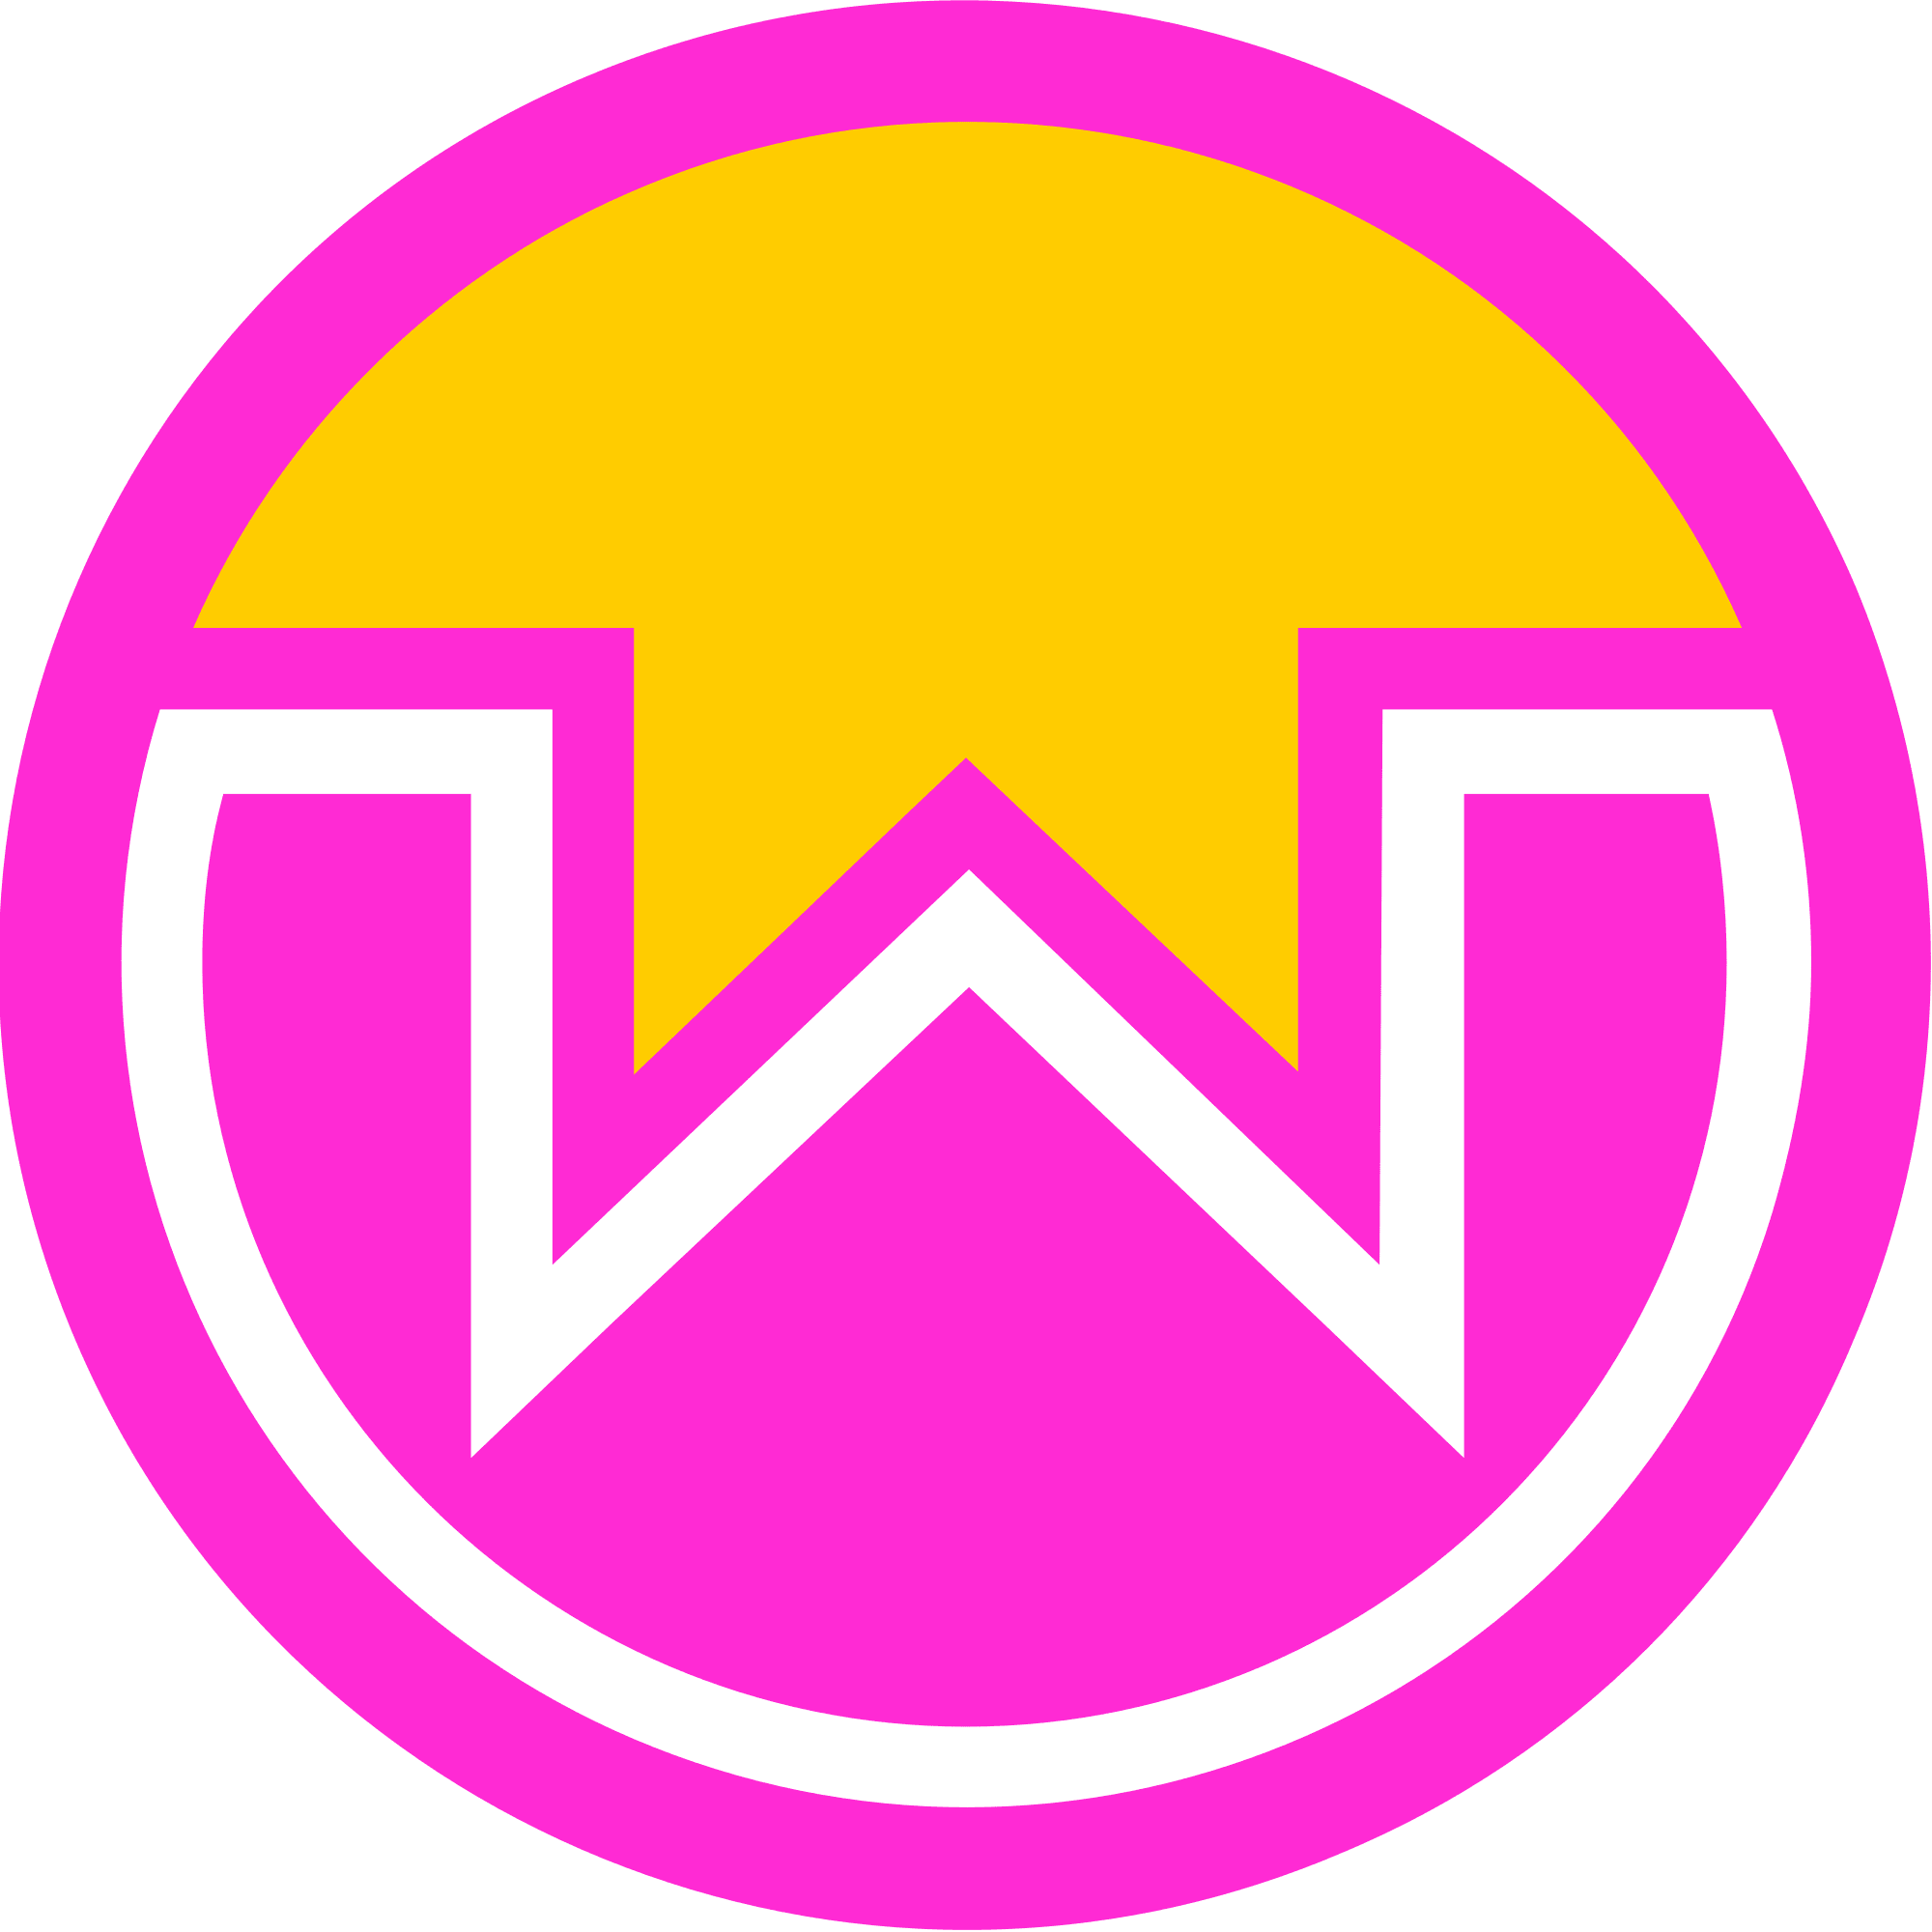 Wownero (WOW) logo